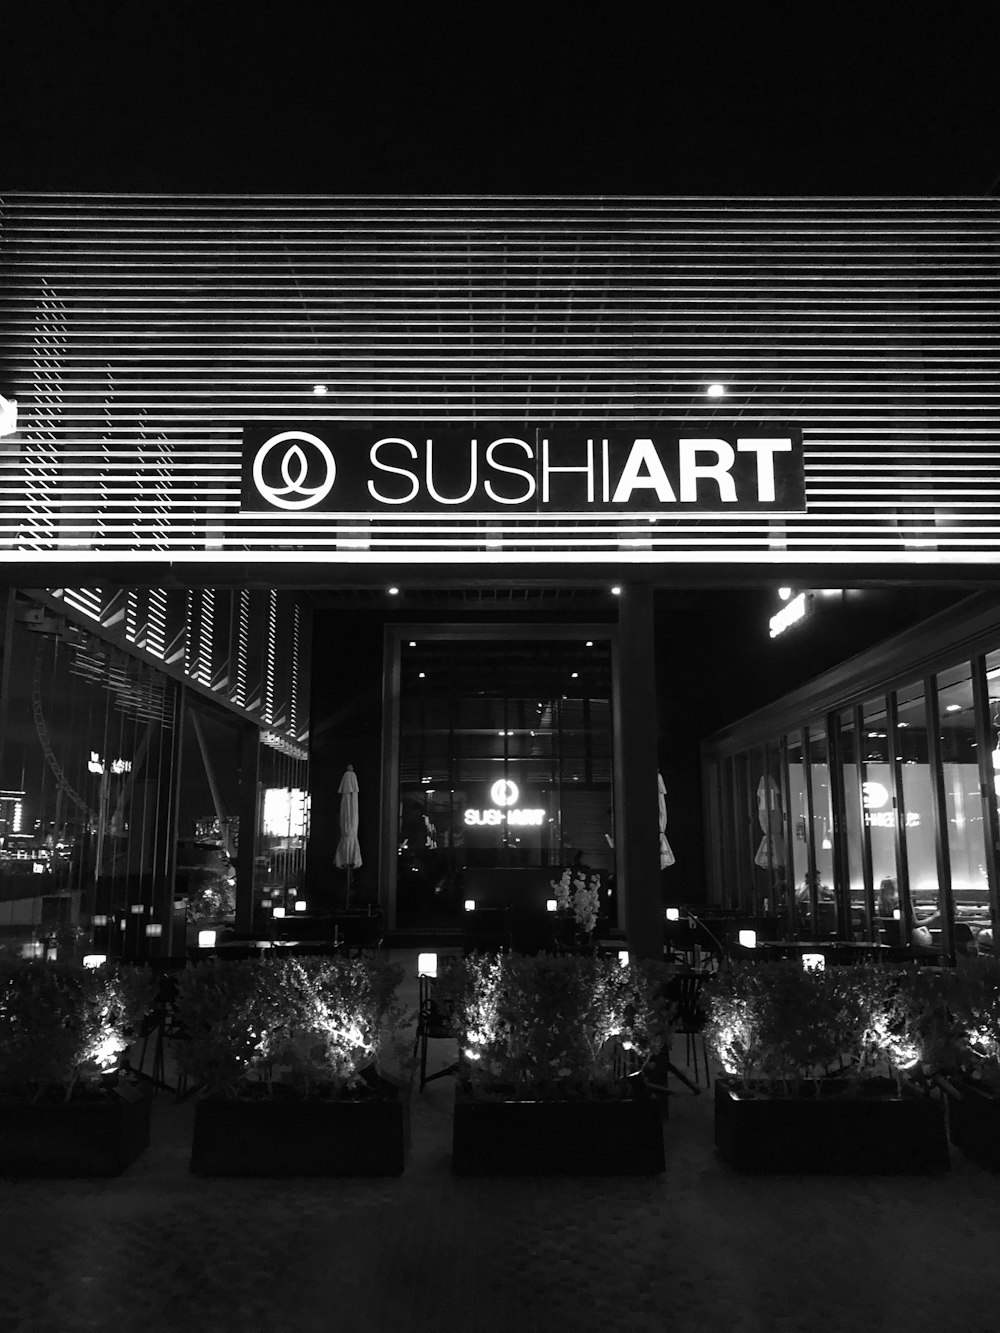 Sushi Art restaurant in grayscale photo